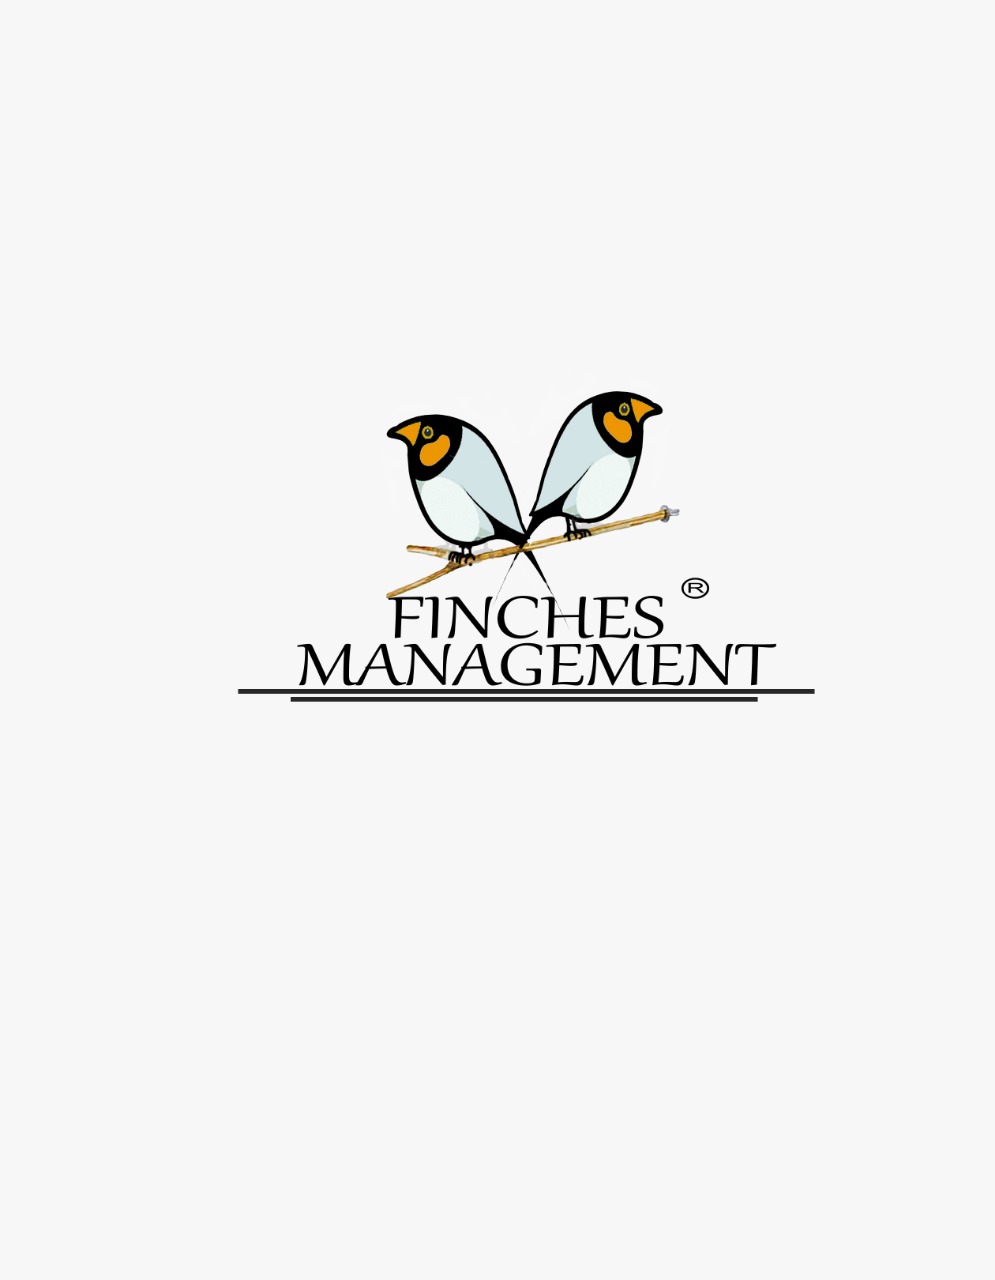 Finches management Pty ltd